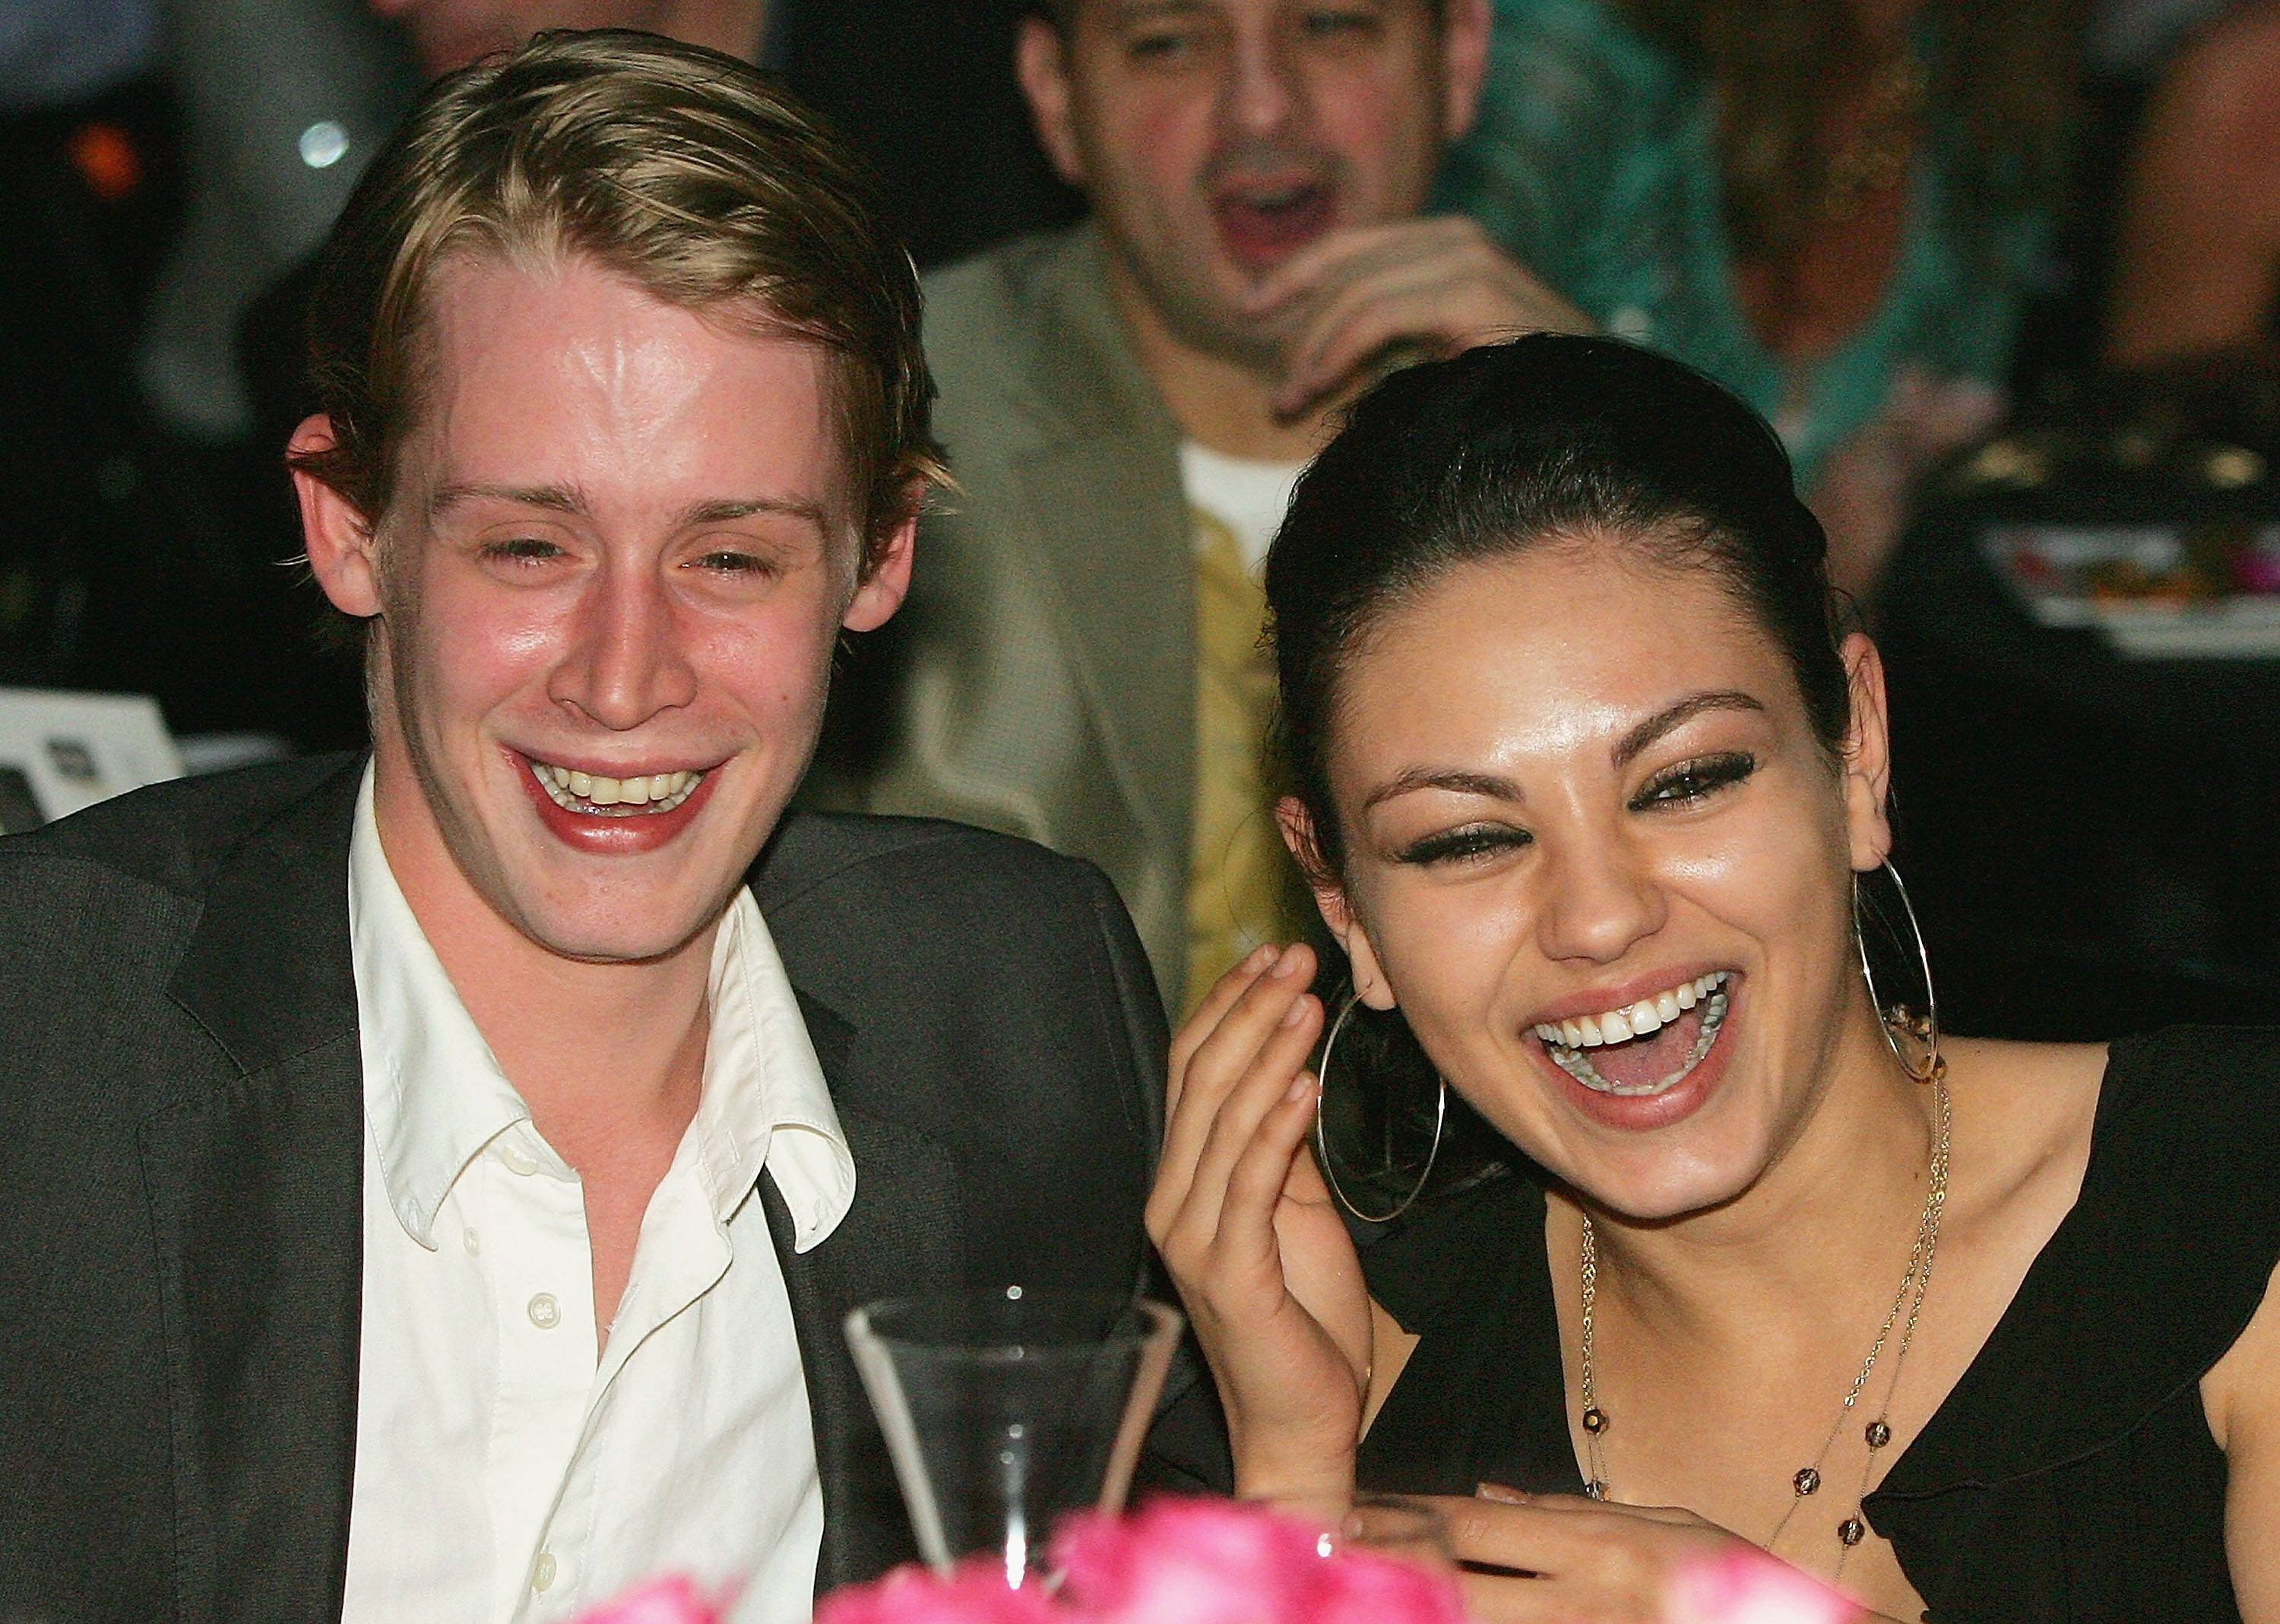 Macaulay Culkin and Mila Kunis laughing together